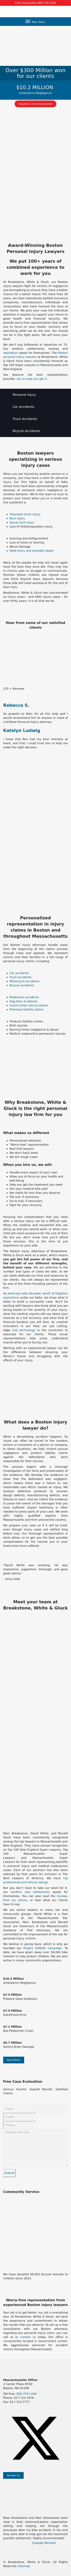 Breakstone, White & Gluck - Boston MA Lawyers